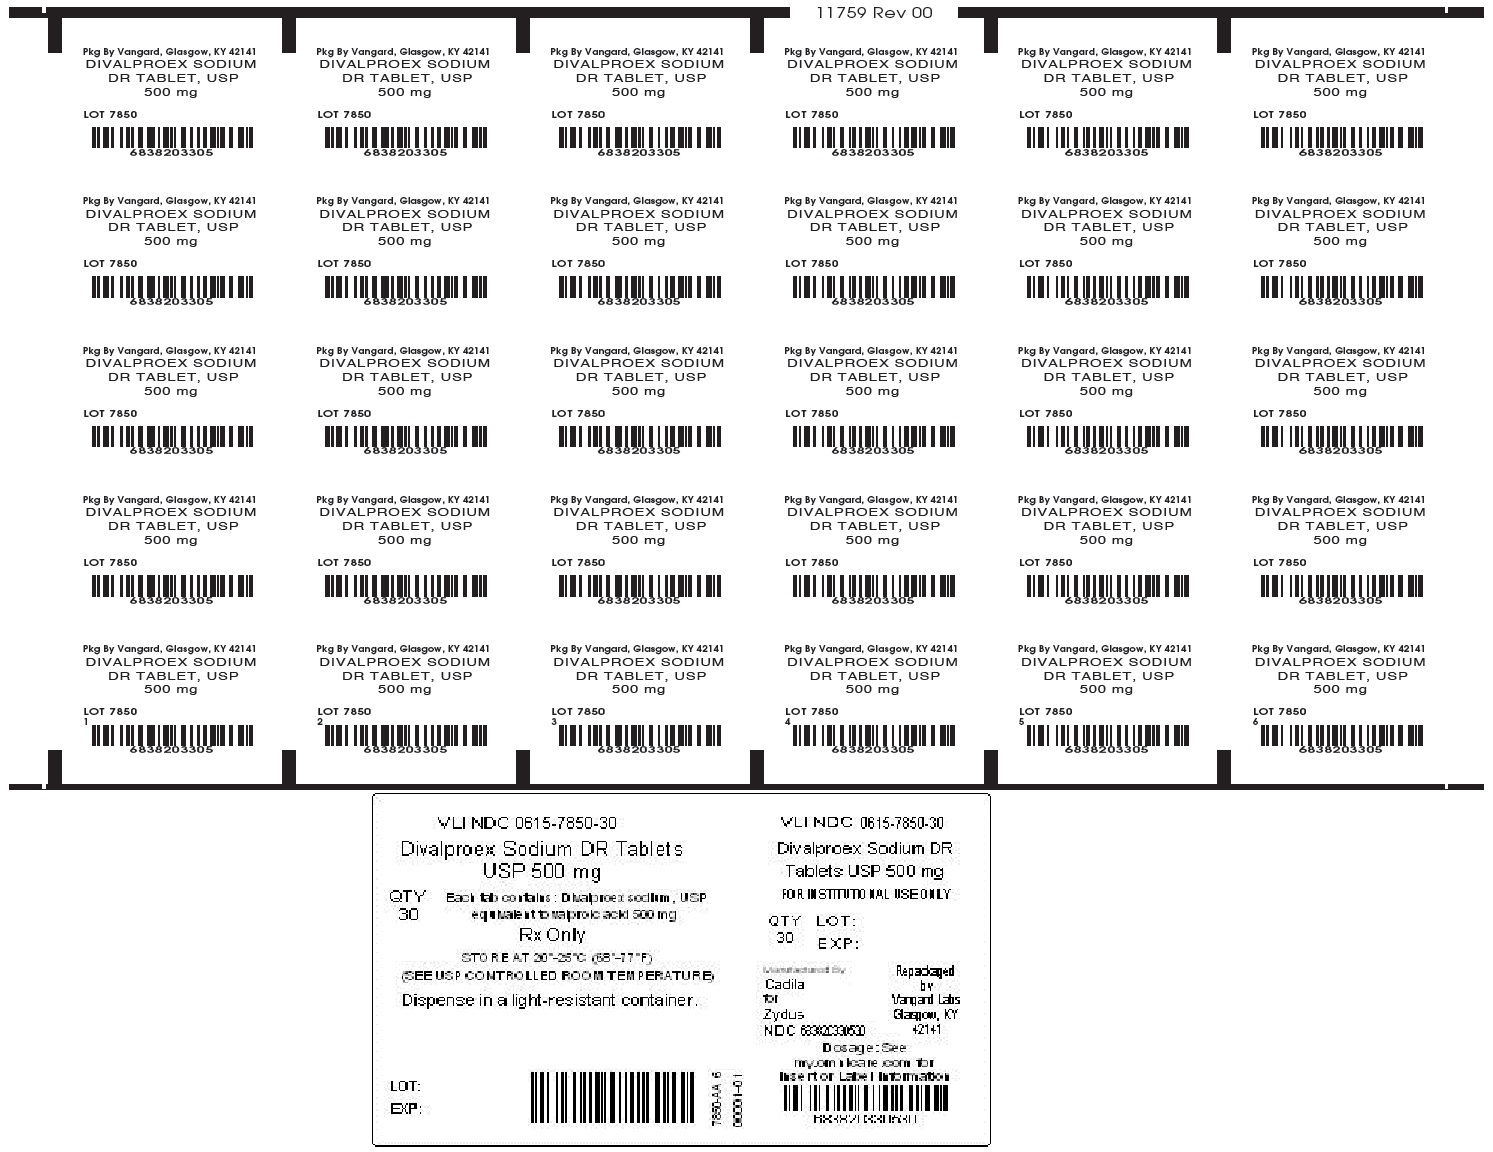 Divalproex Sodium DR Tablet 500mg unit dose label